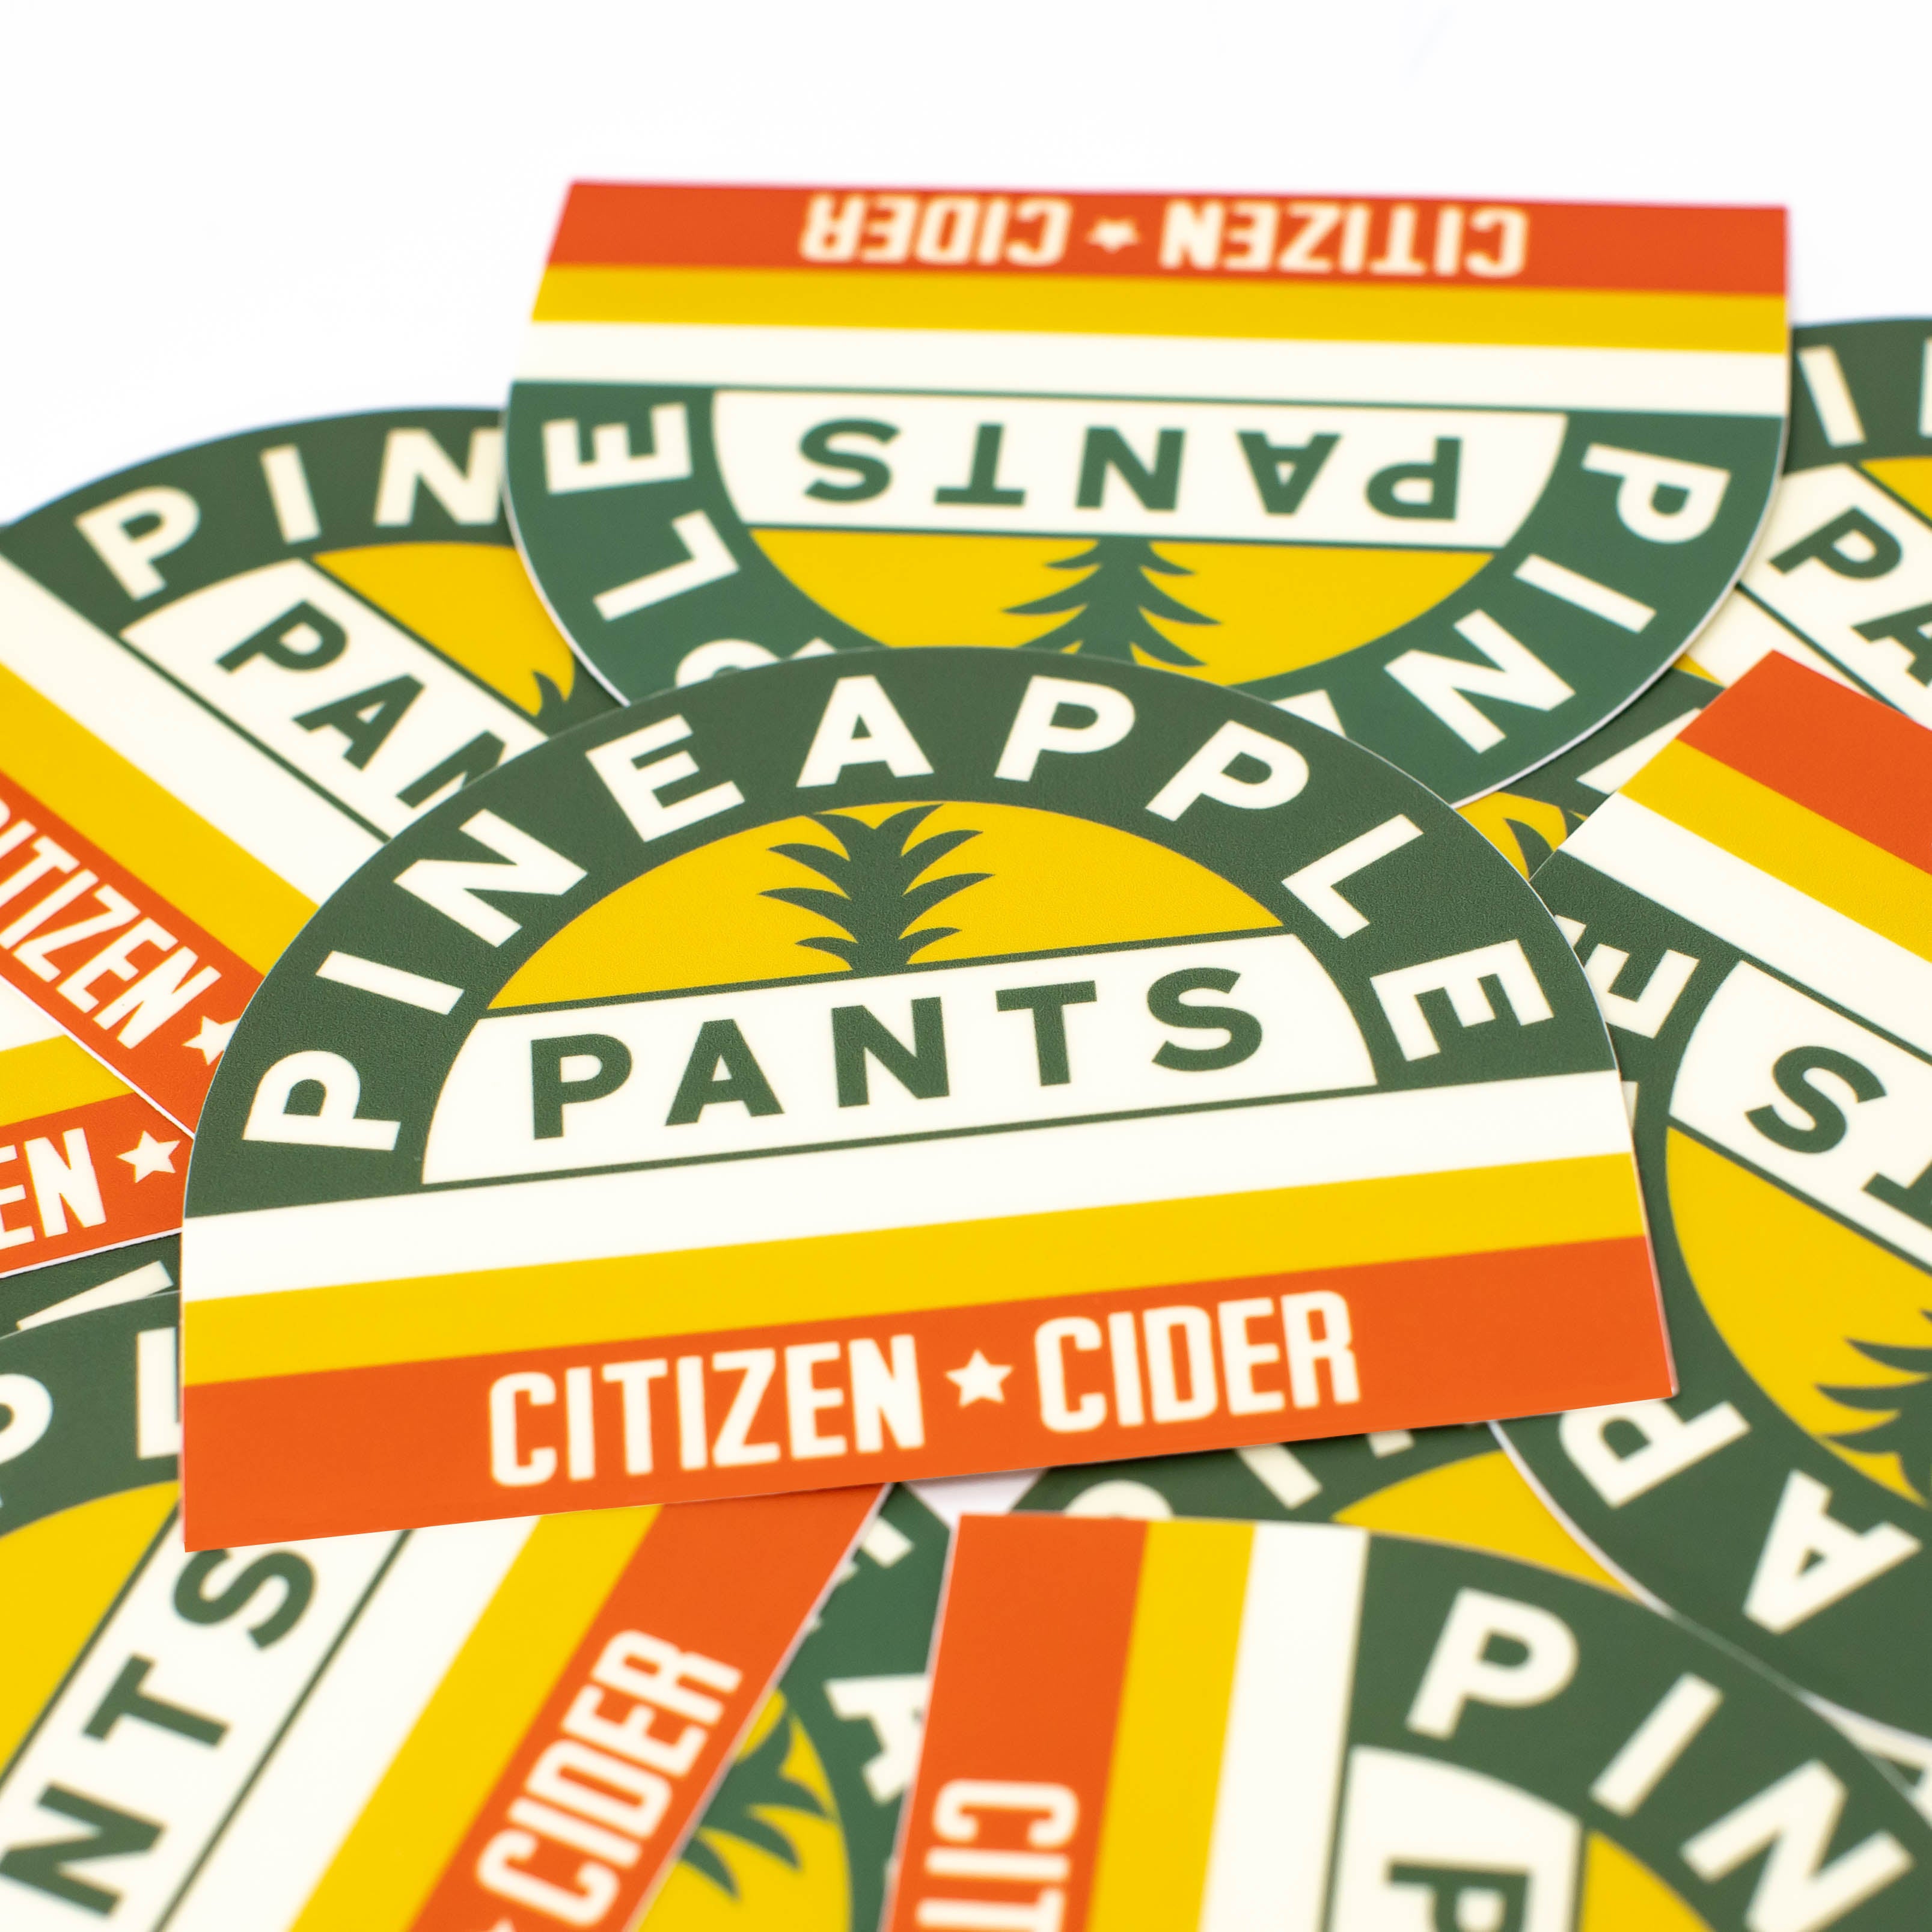 Stak of Pineapple Pants Citizen Cider vinyl stickers